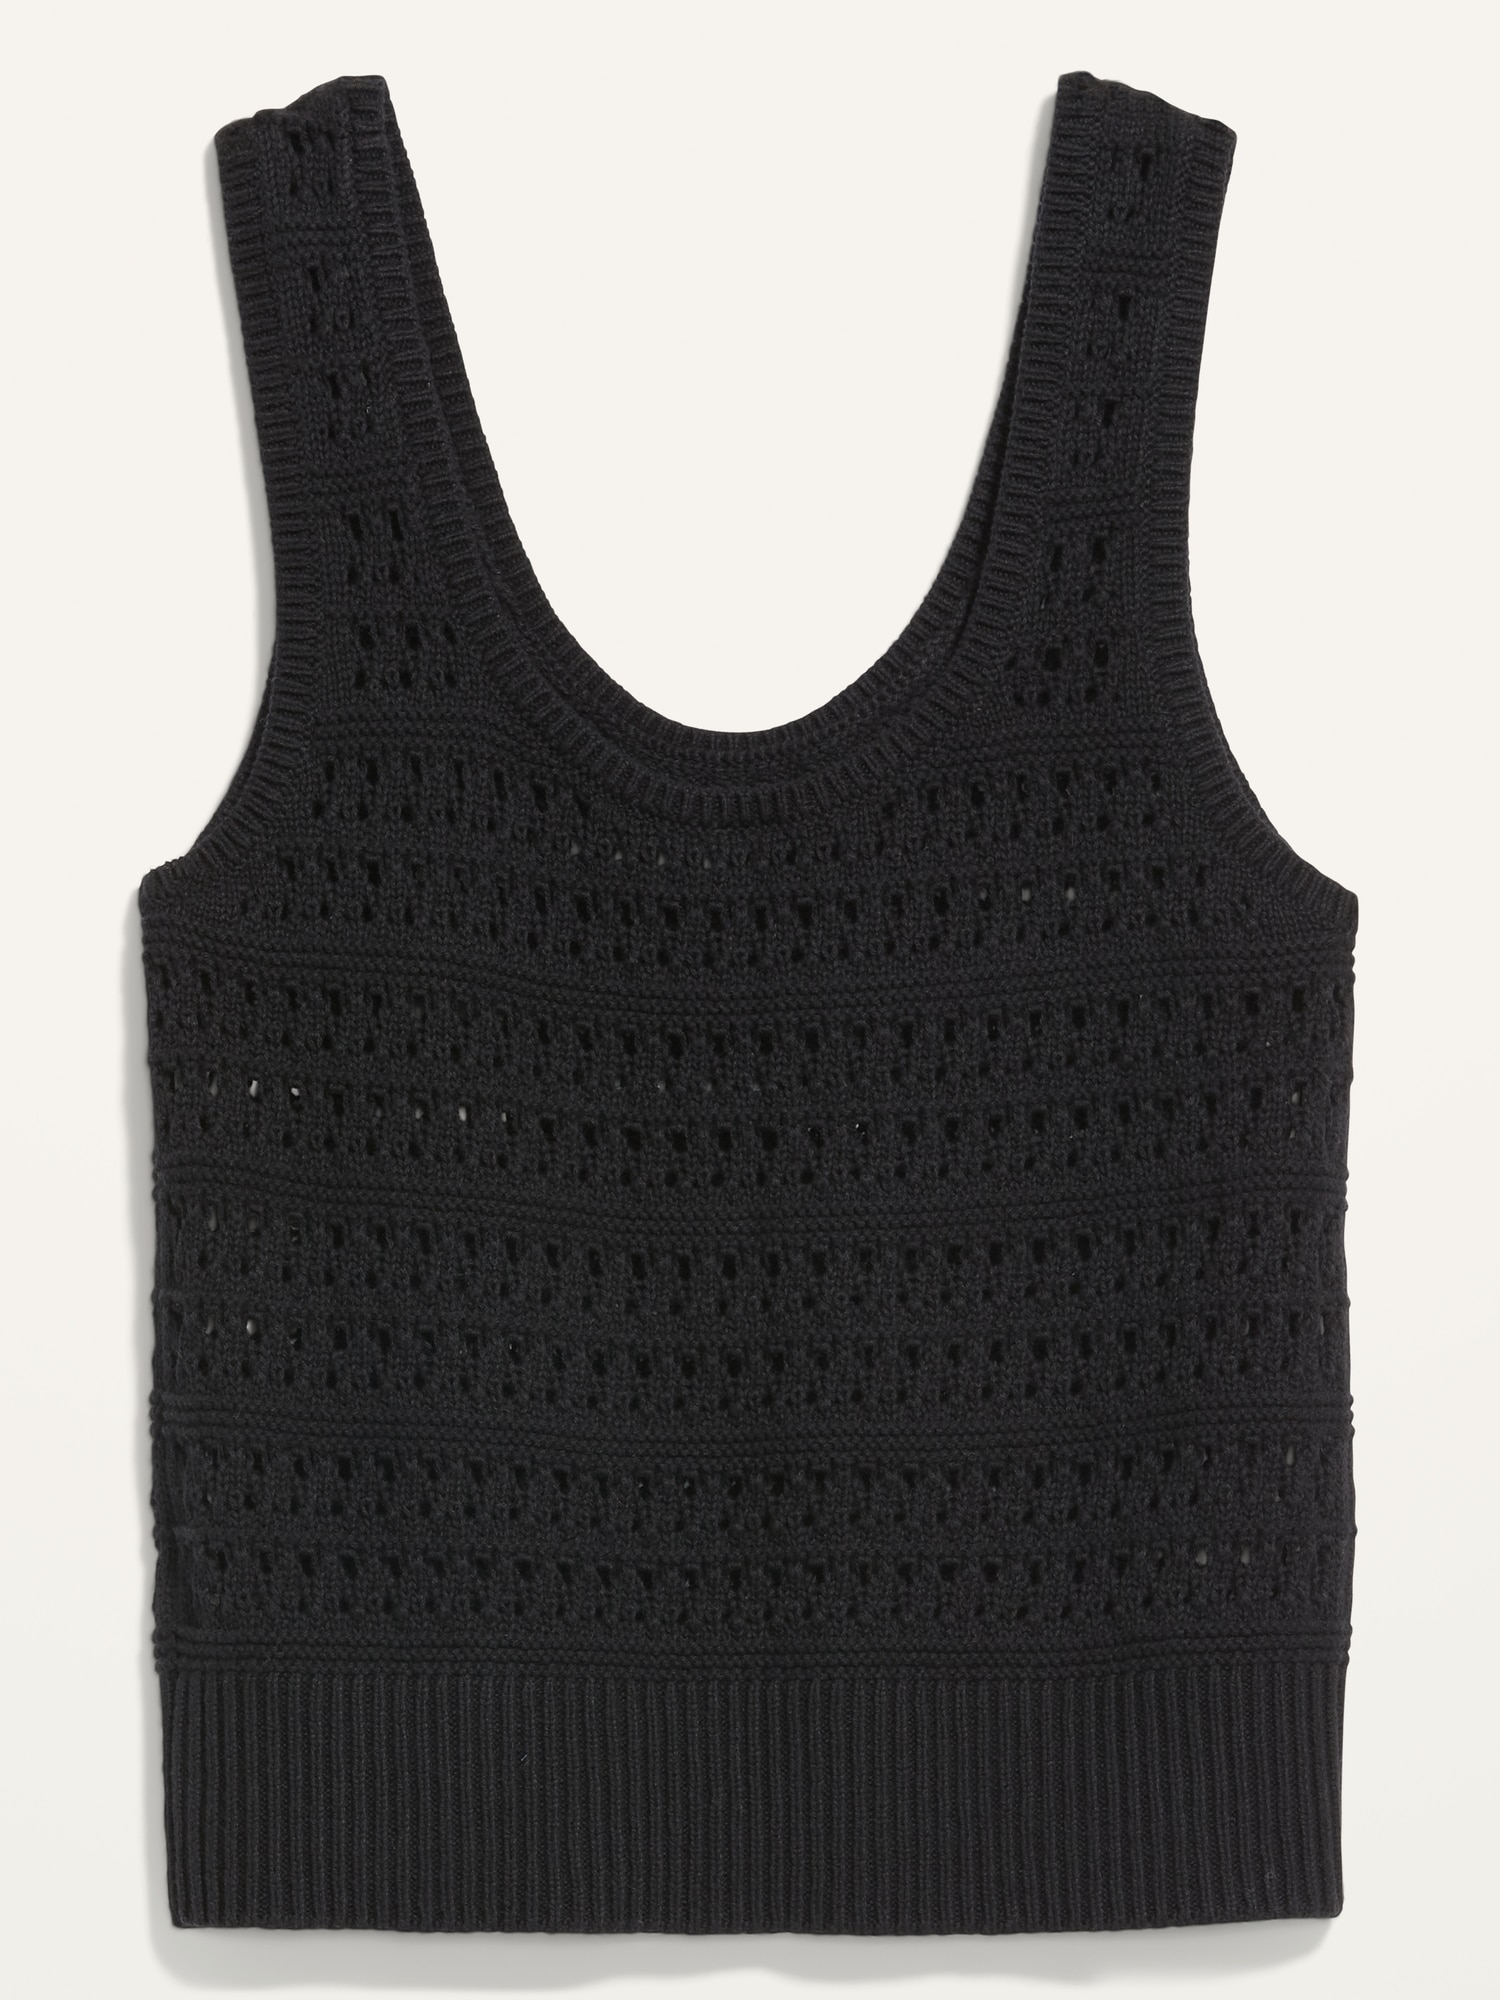 Cropped Open-Knit Sweater Tank Top for Women